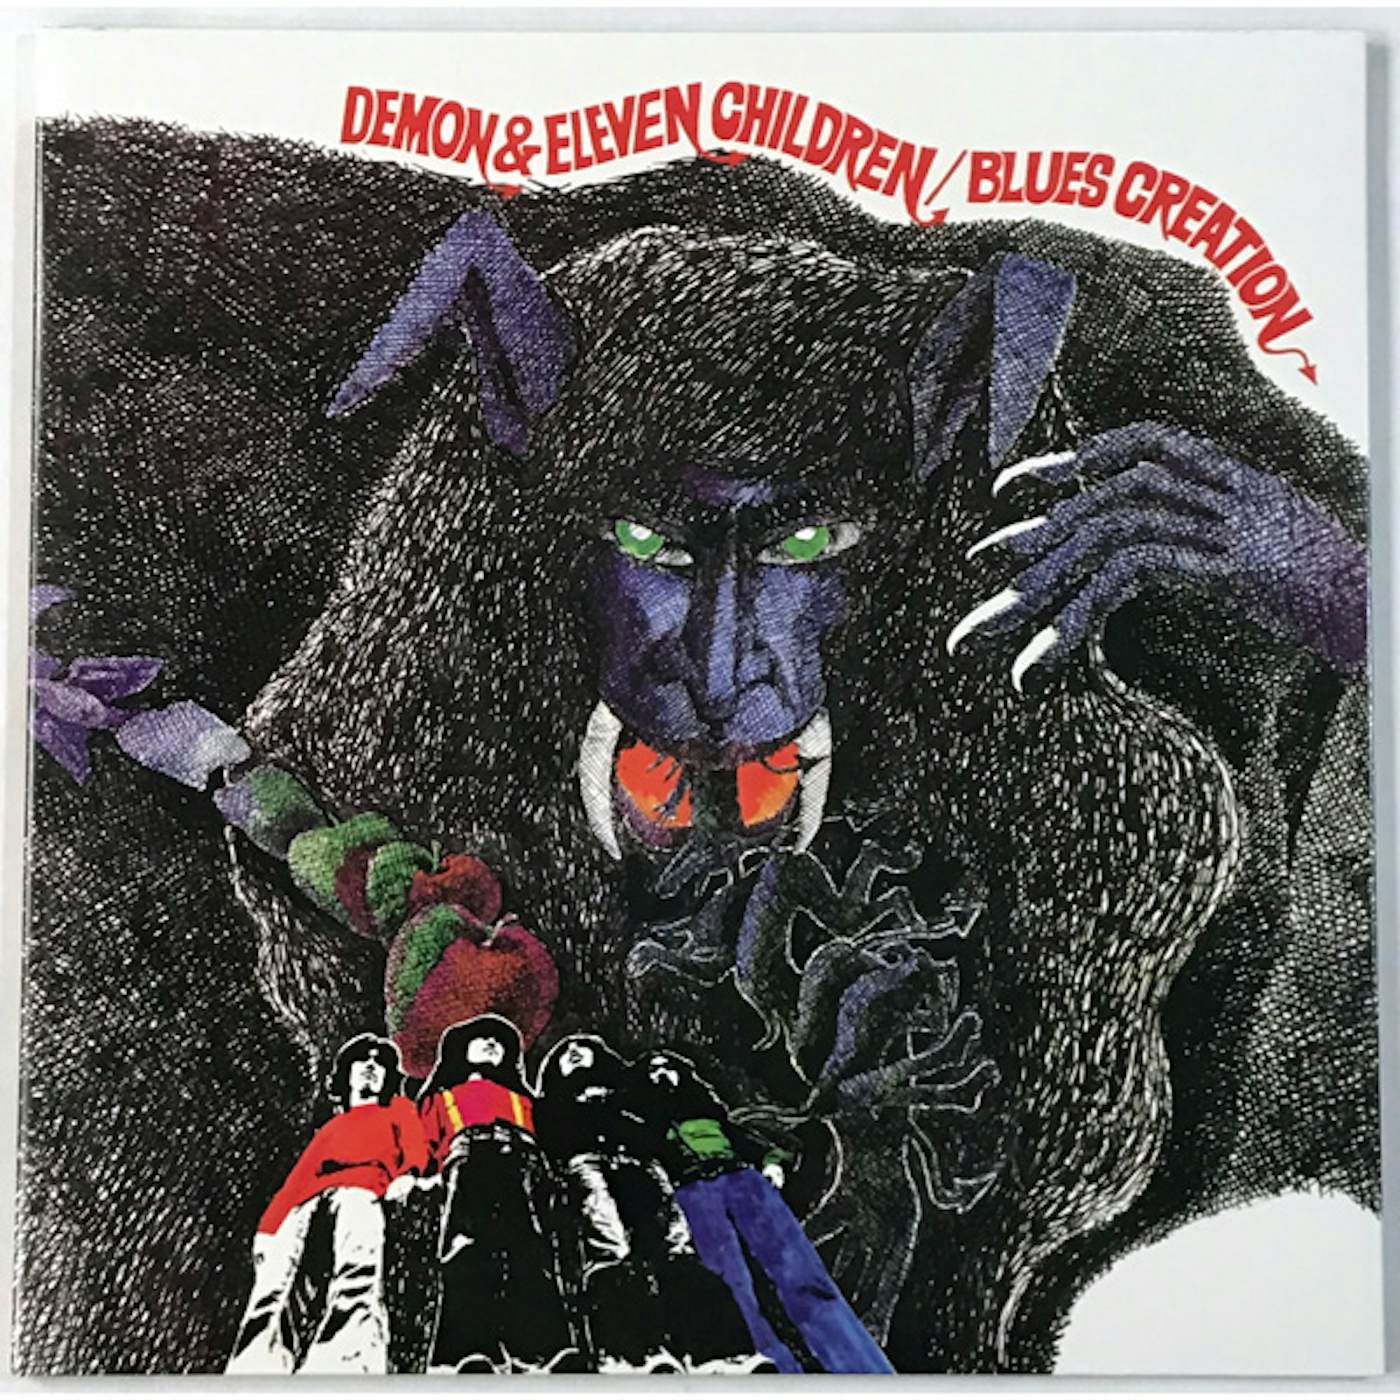 Blues Creation Demon & Eleven Children Vinyl Record